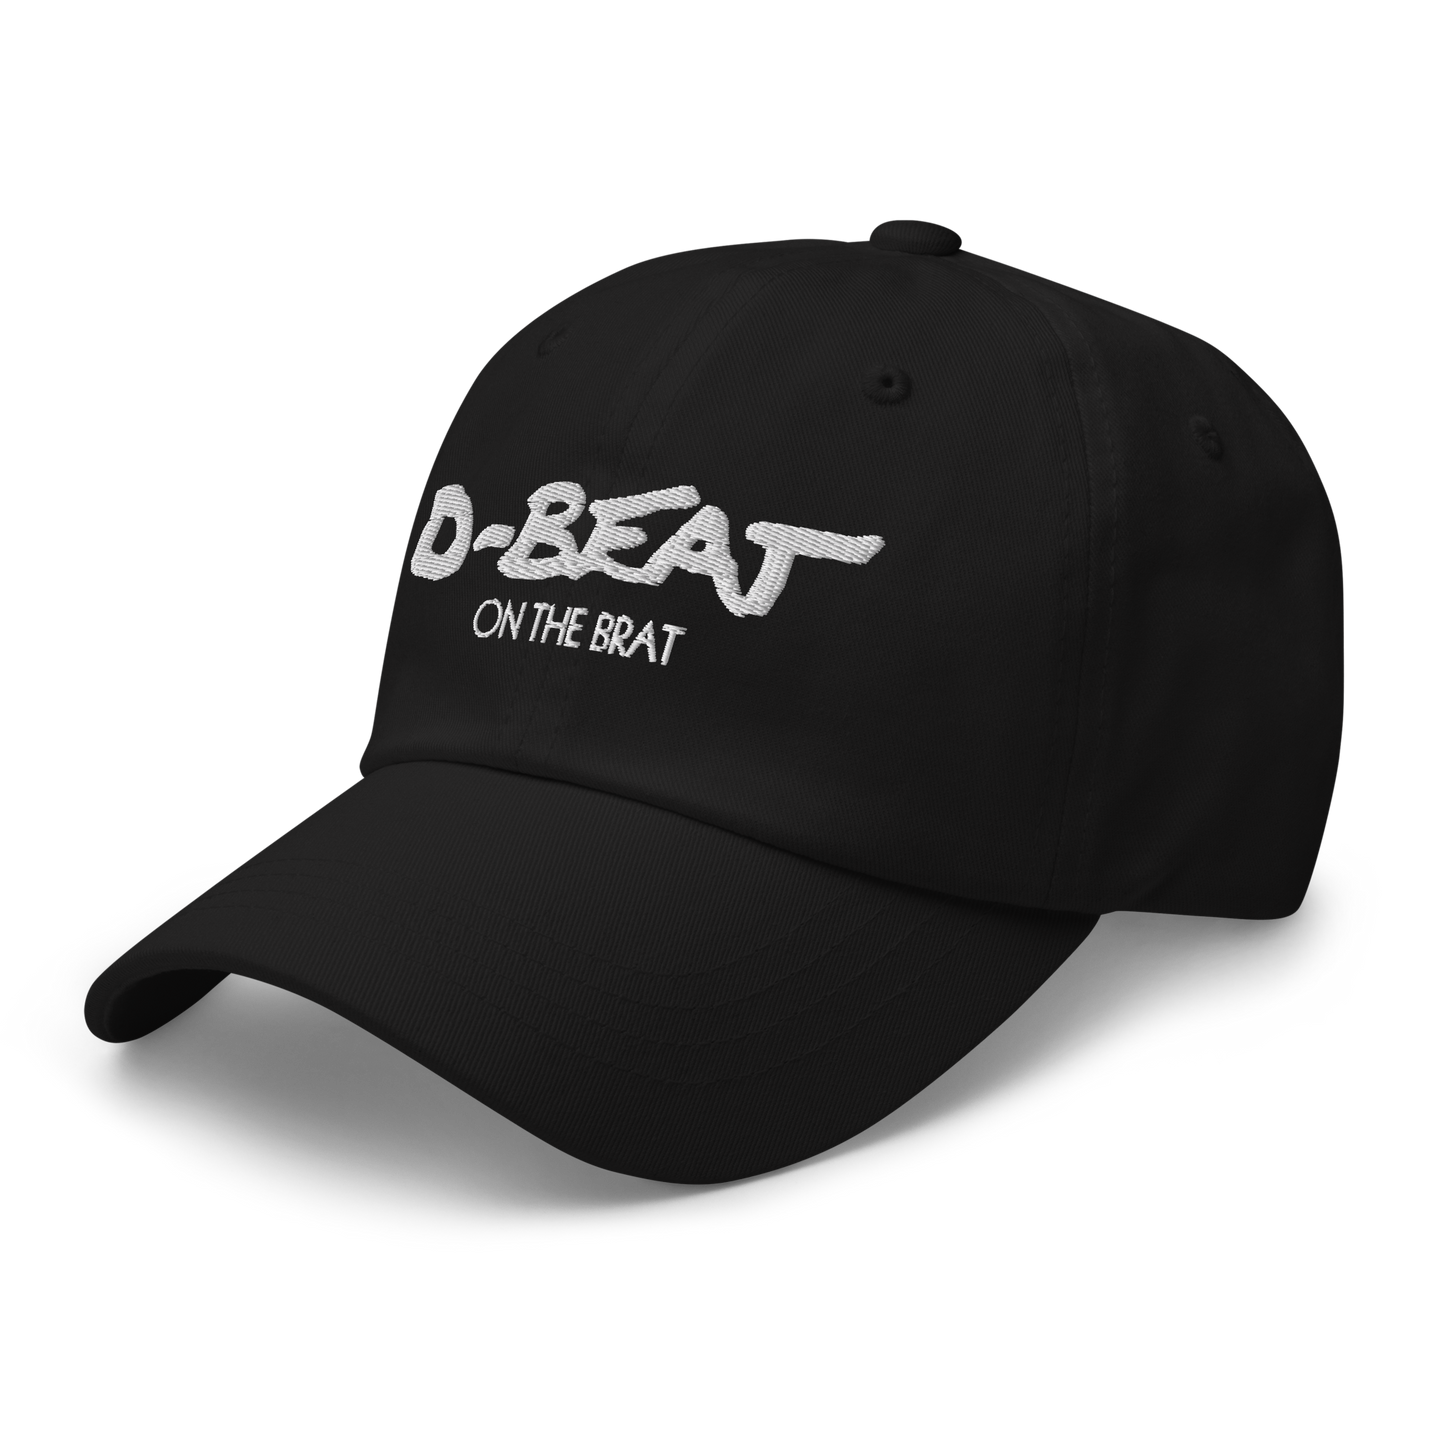 Stealworks "D-Beat on the Brat" Flex-fit Hat